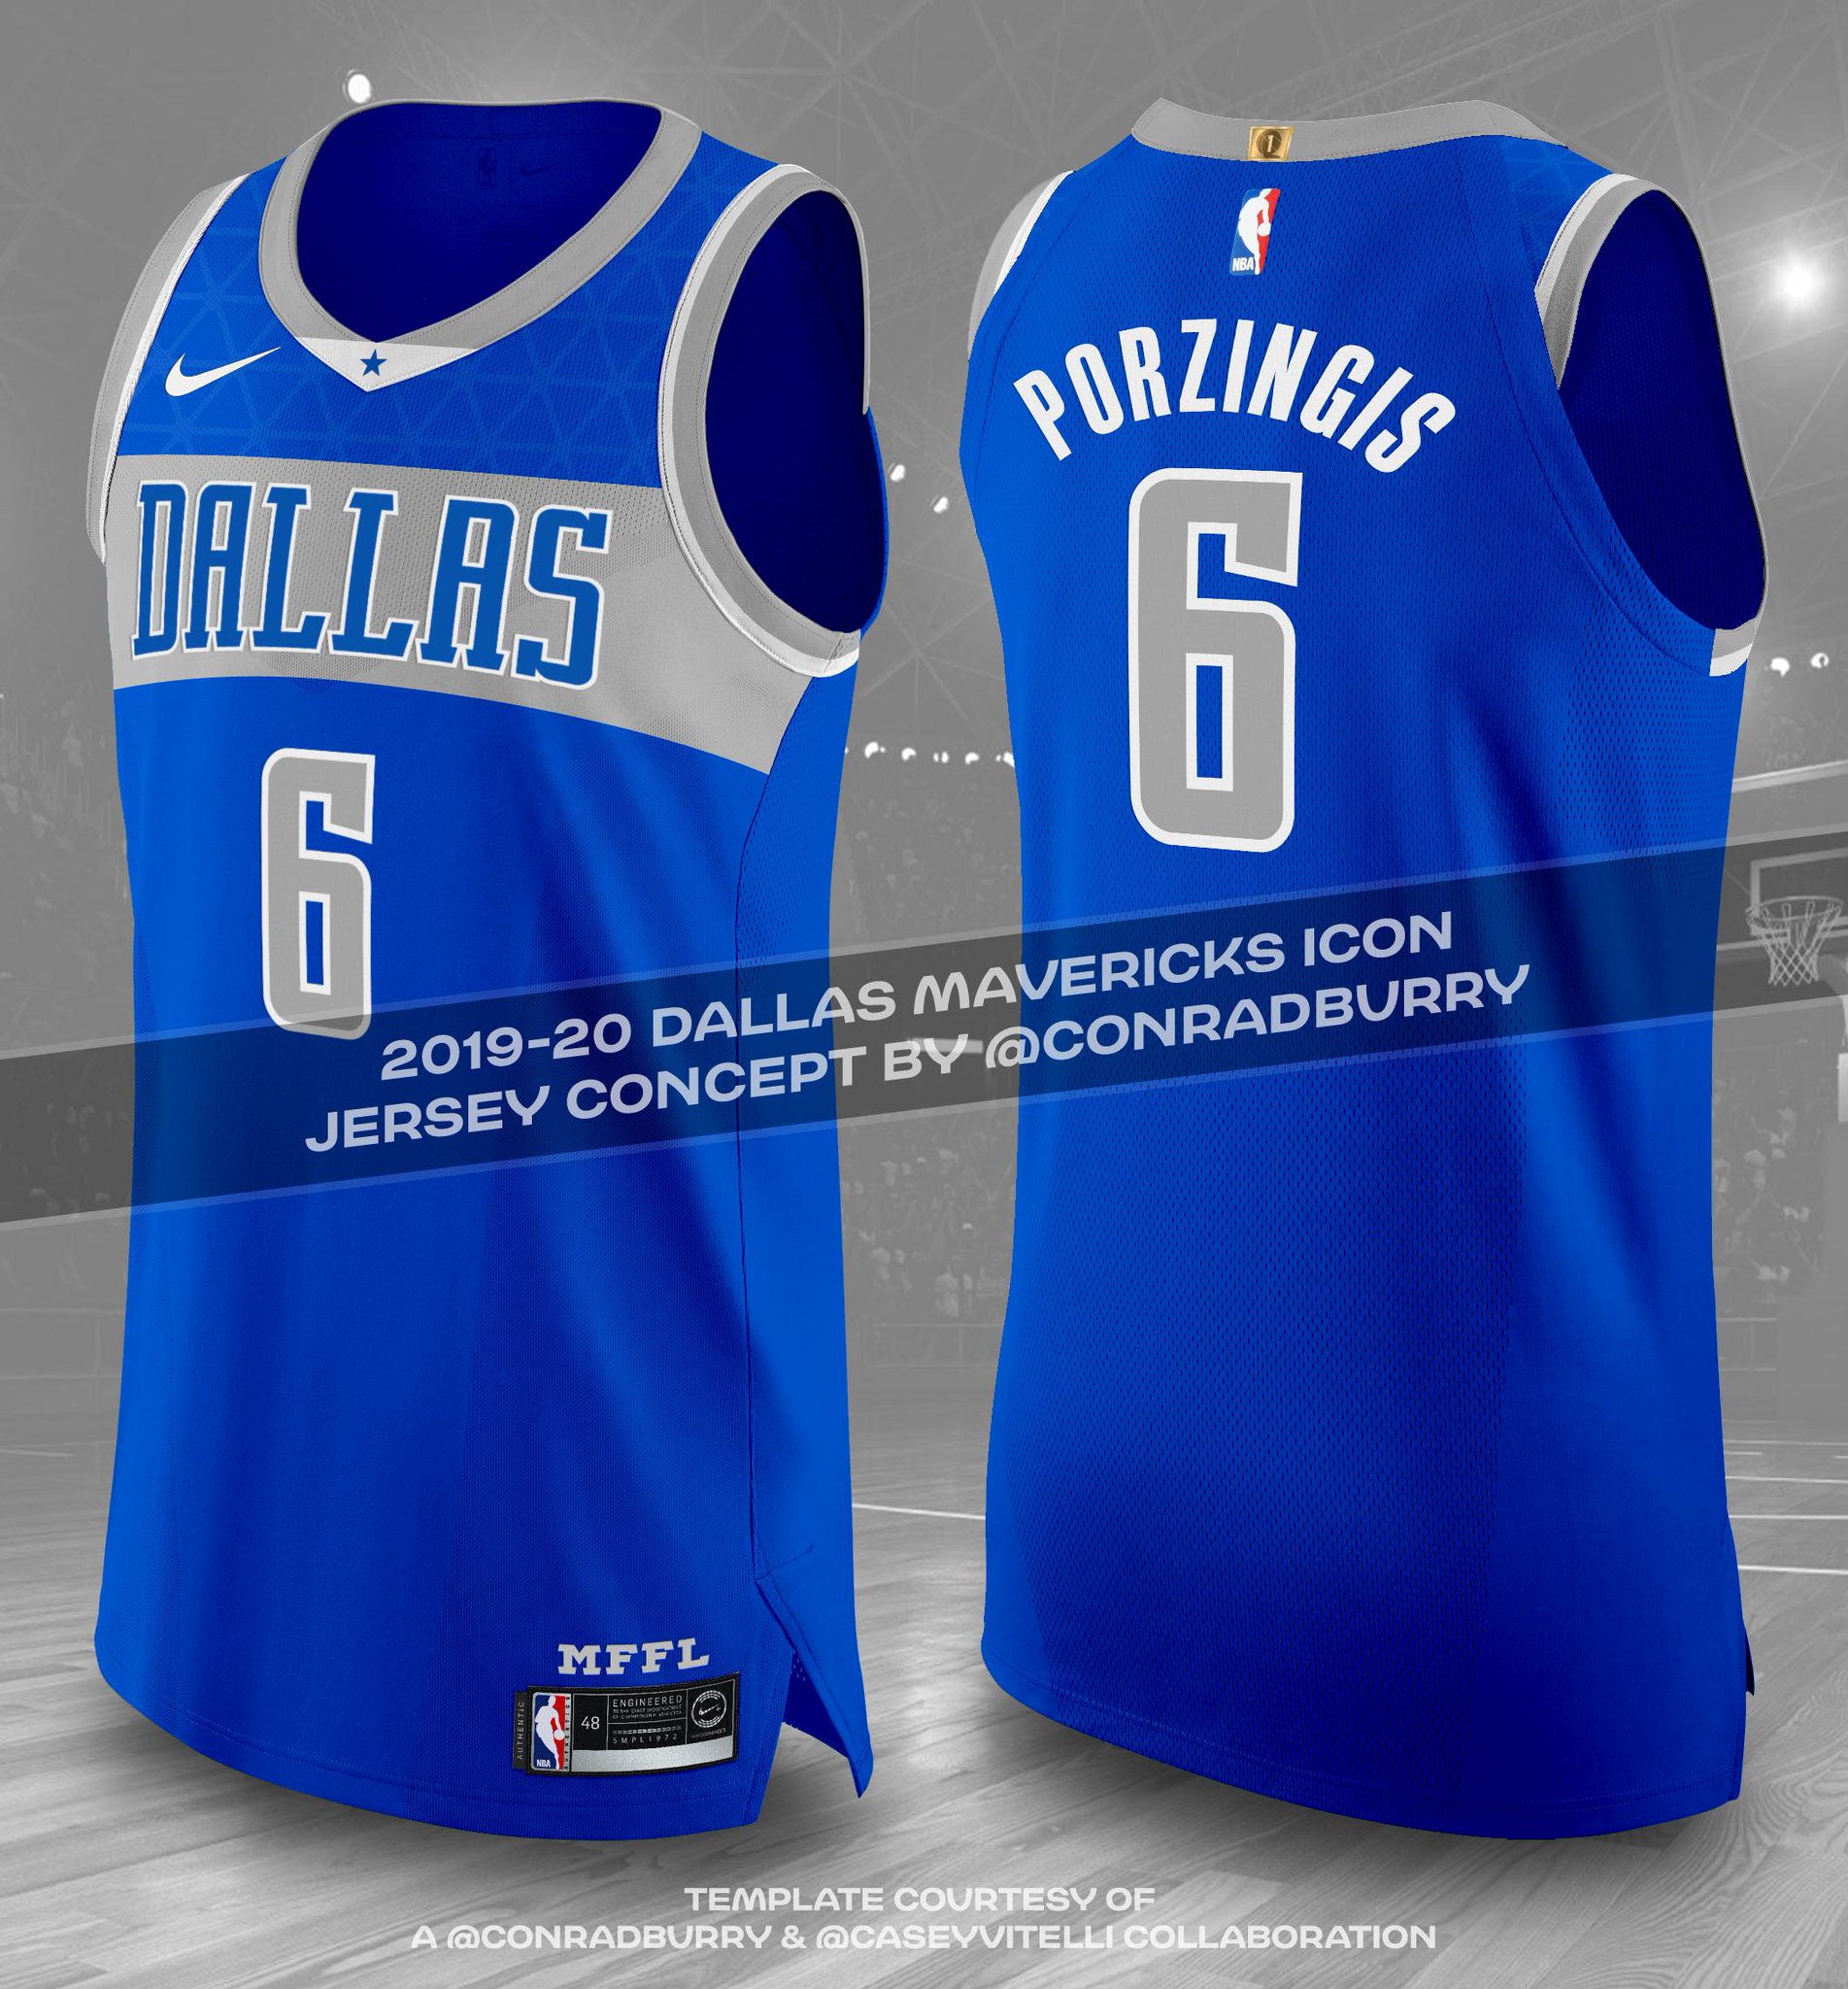 A designer made these cool NBA concept jerseys 🏀 (via conradburry/Twitter)